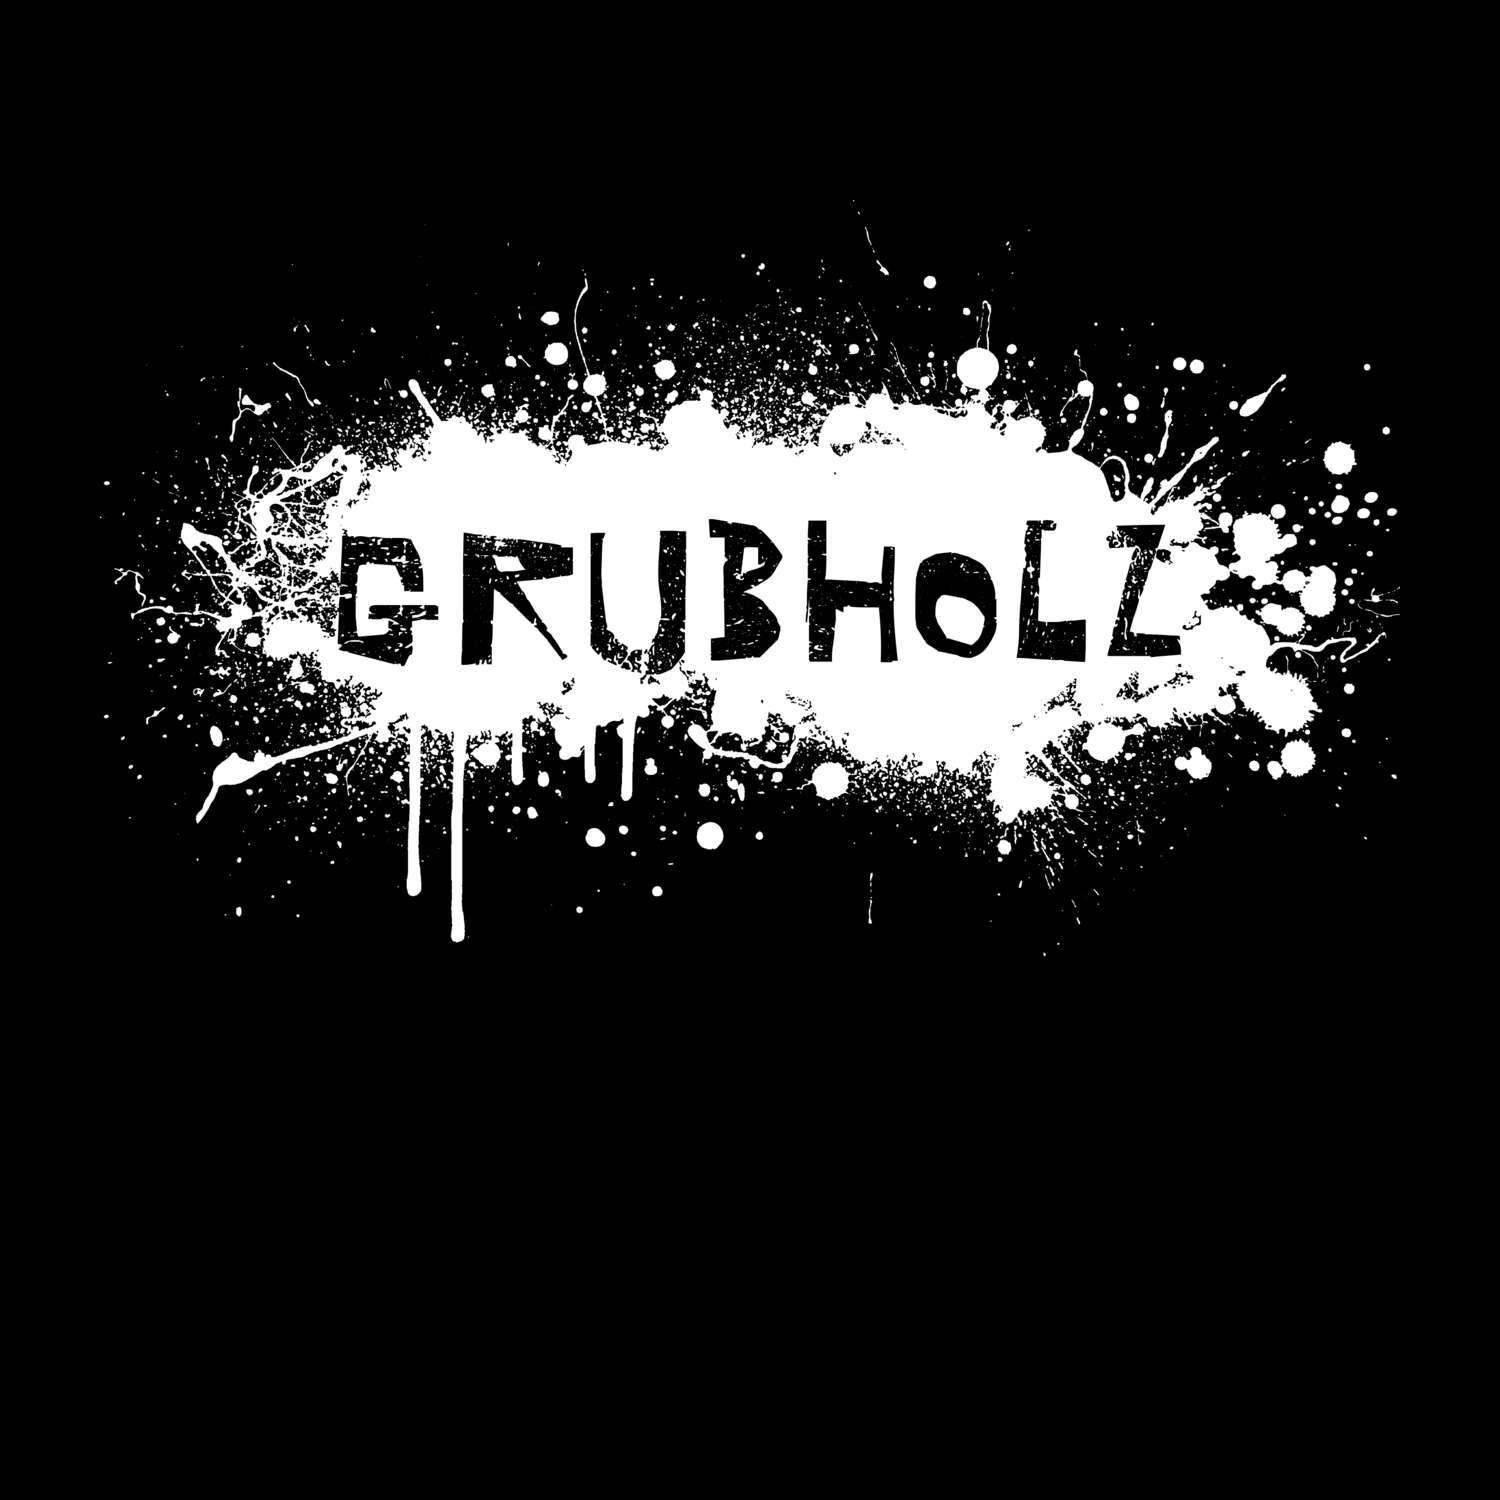 Grubholz T-Shirt »Paint Splash Punk«